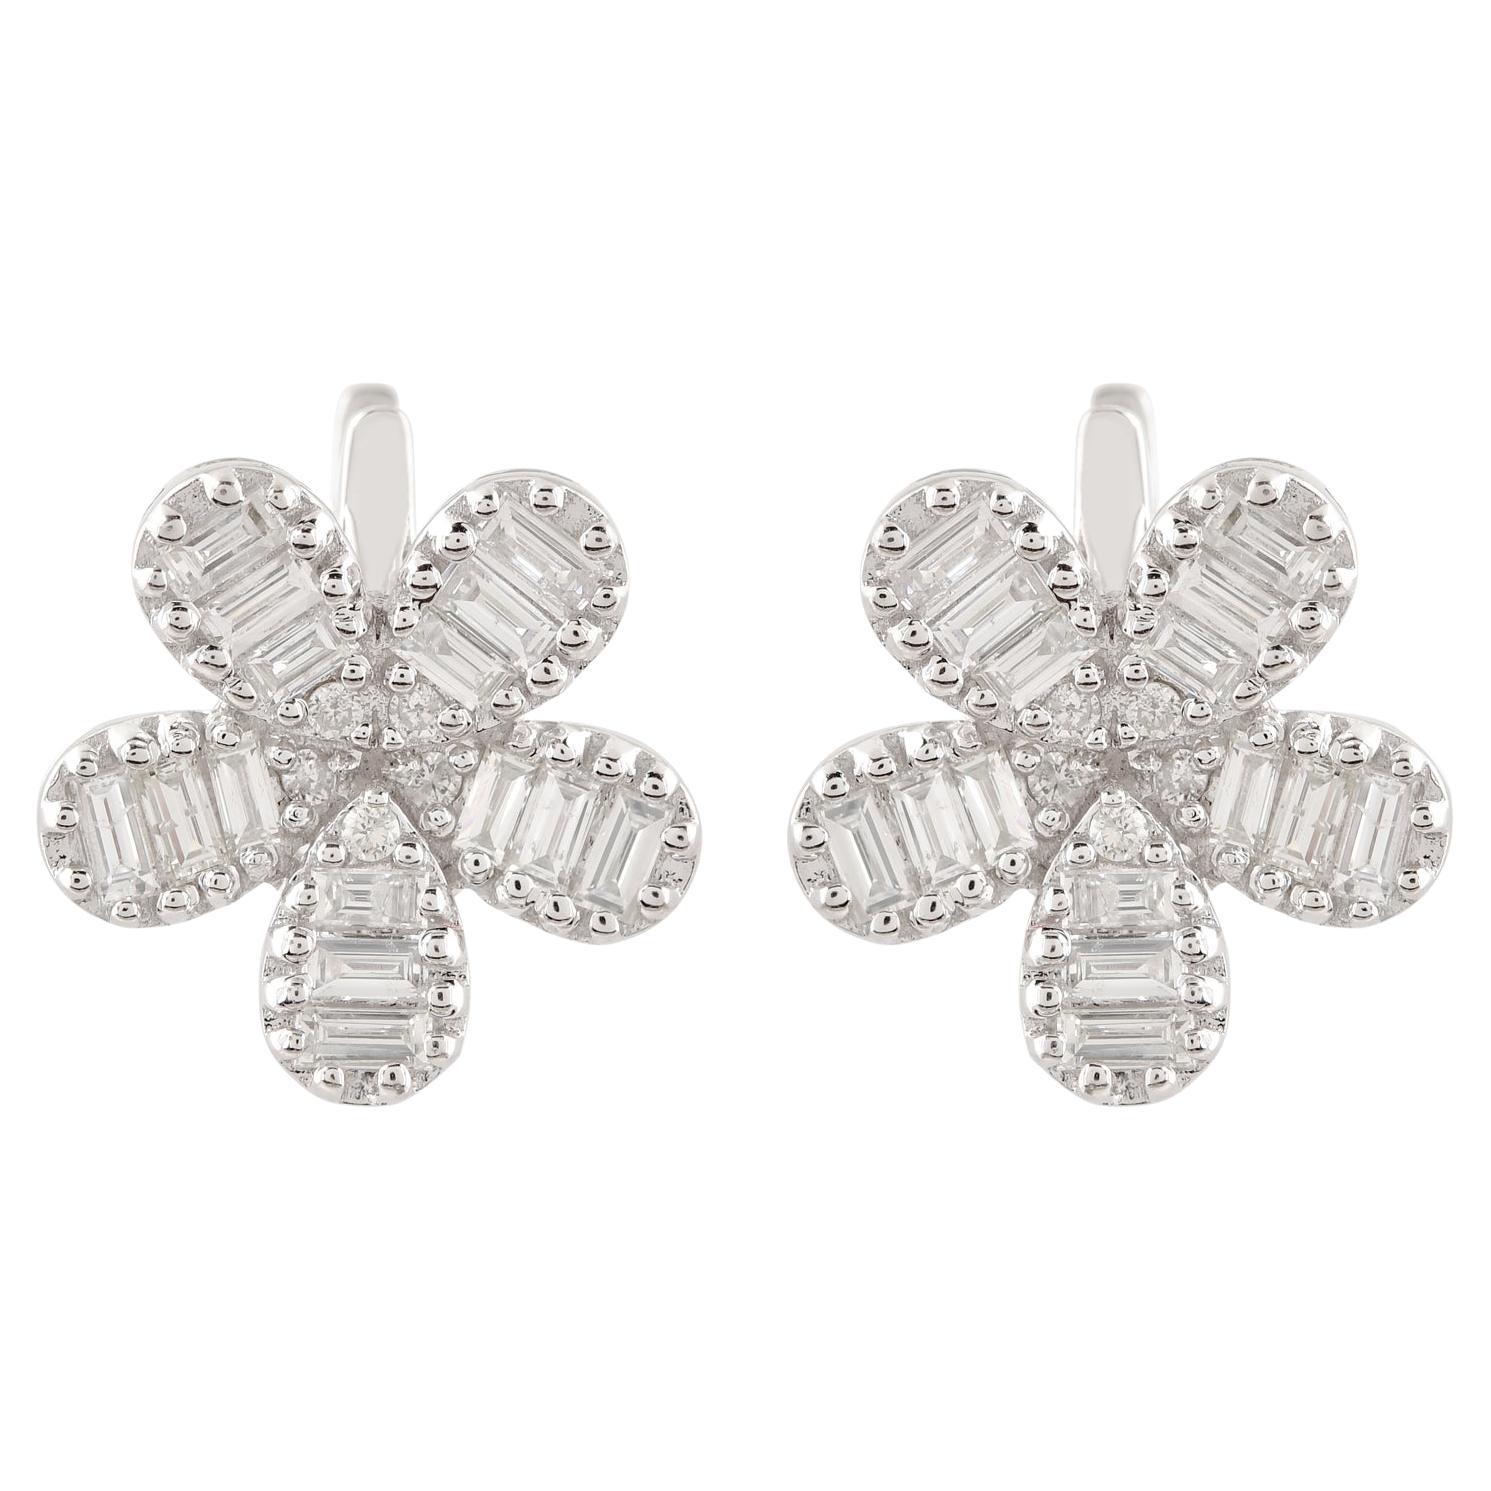 1.01 Carat Baguette Diamond Flower Stud Earrings Solid 18k White Gold Jewelry For Sale